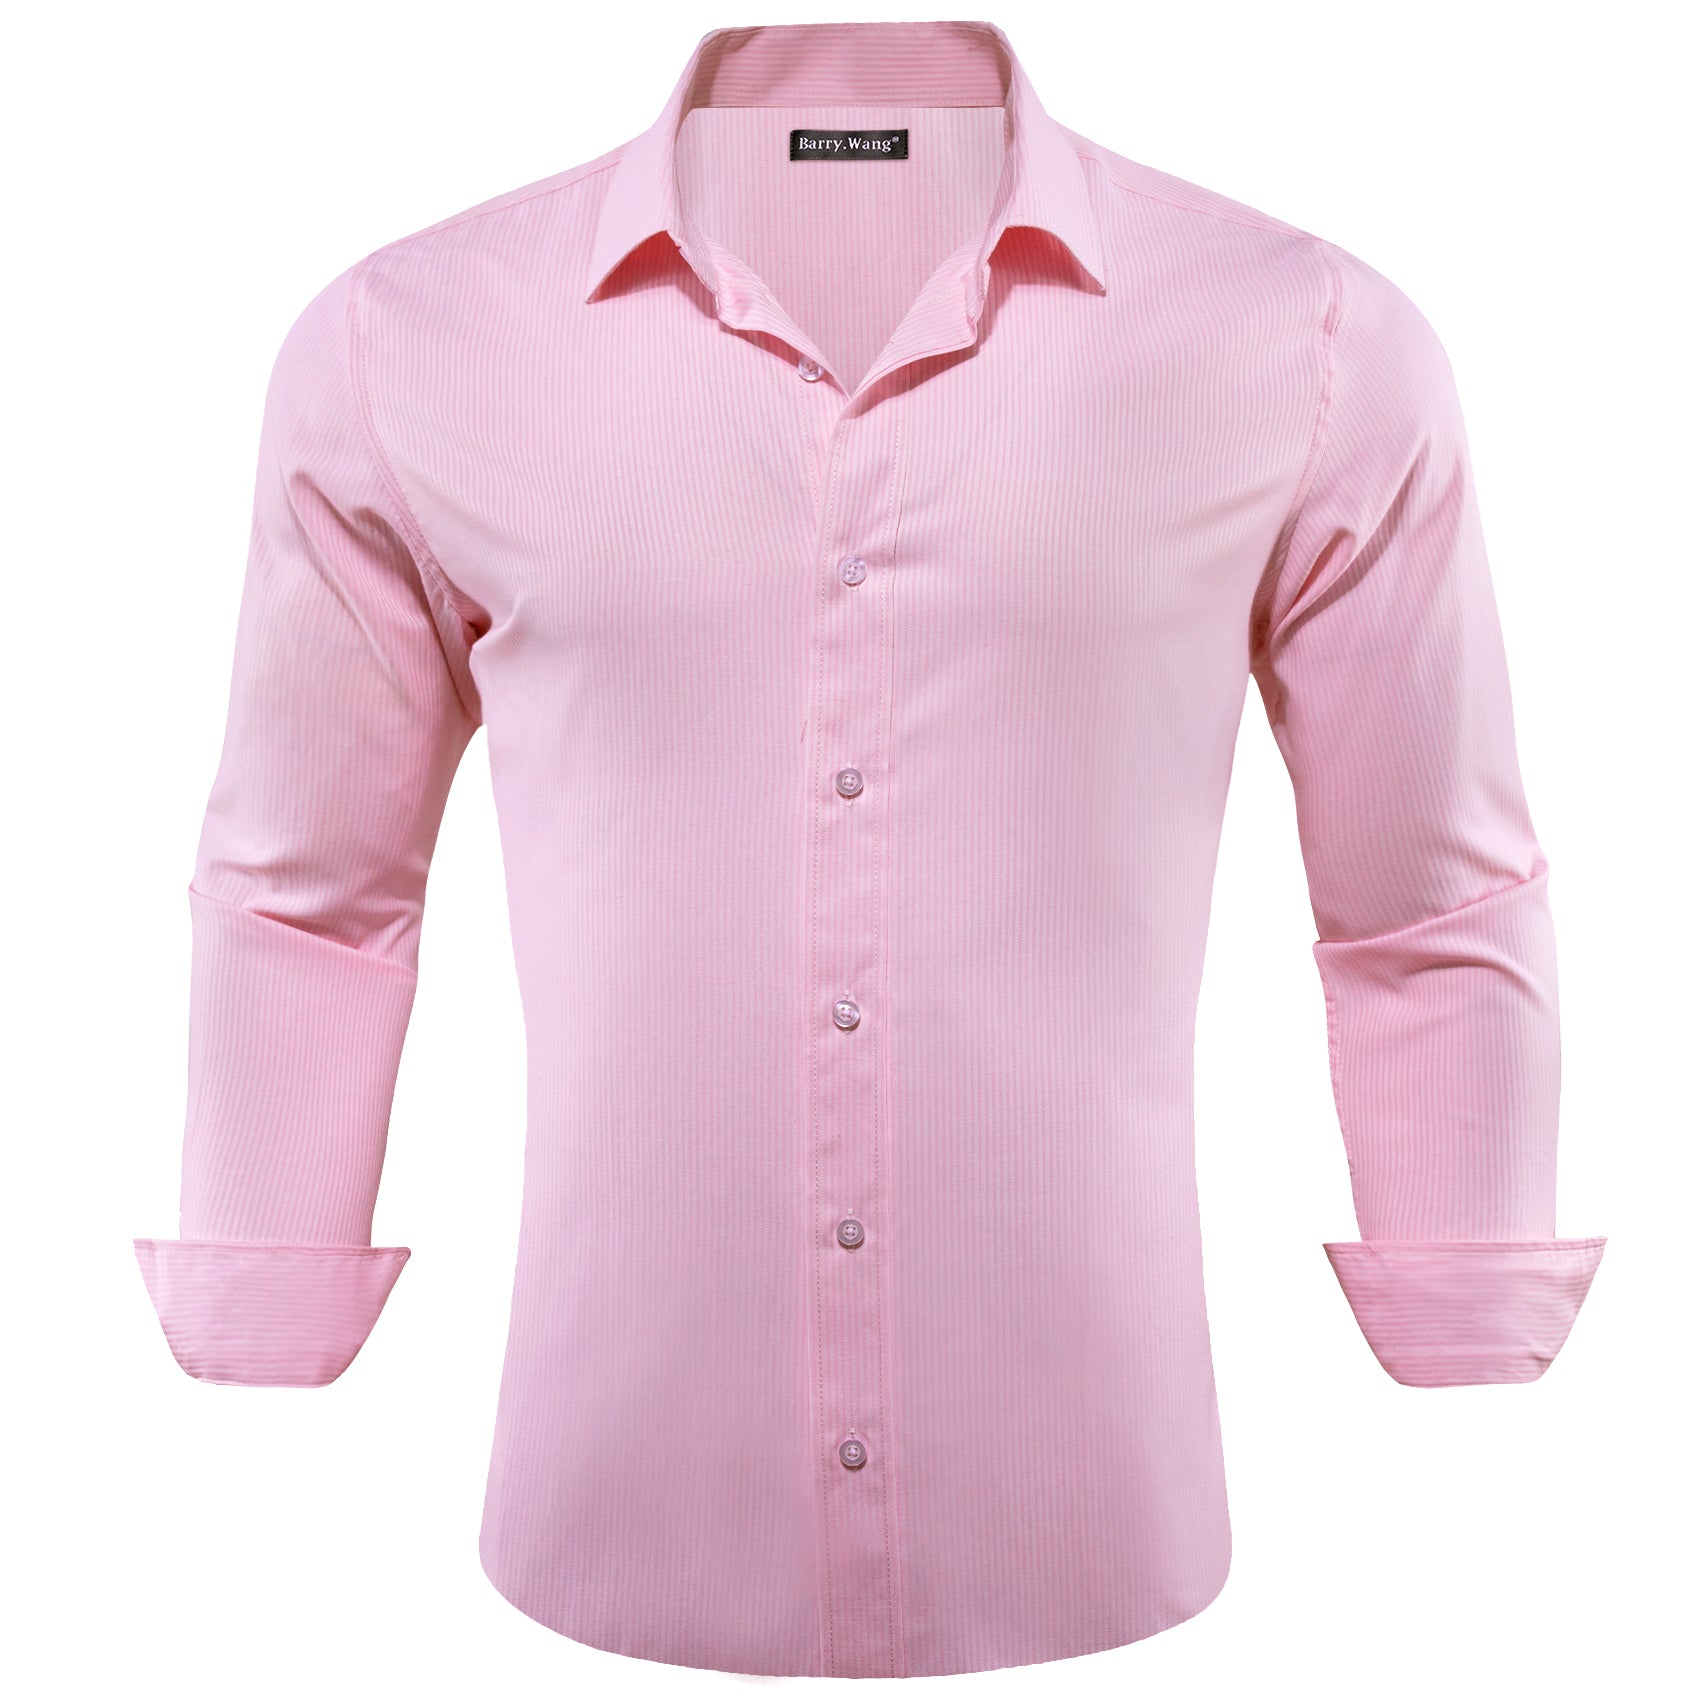 Barry.wang Pink Solid Men's Shirt